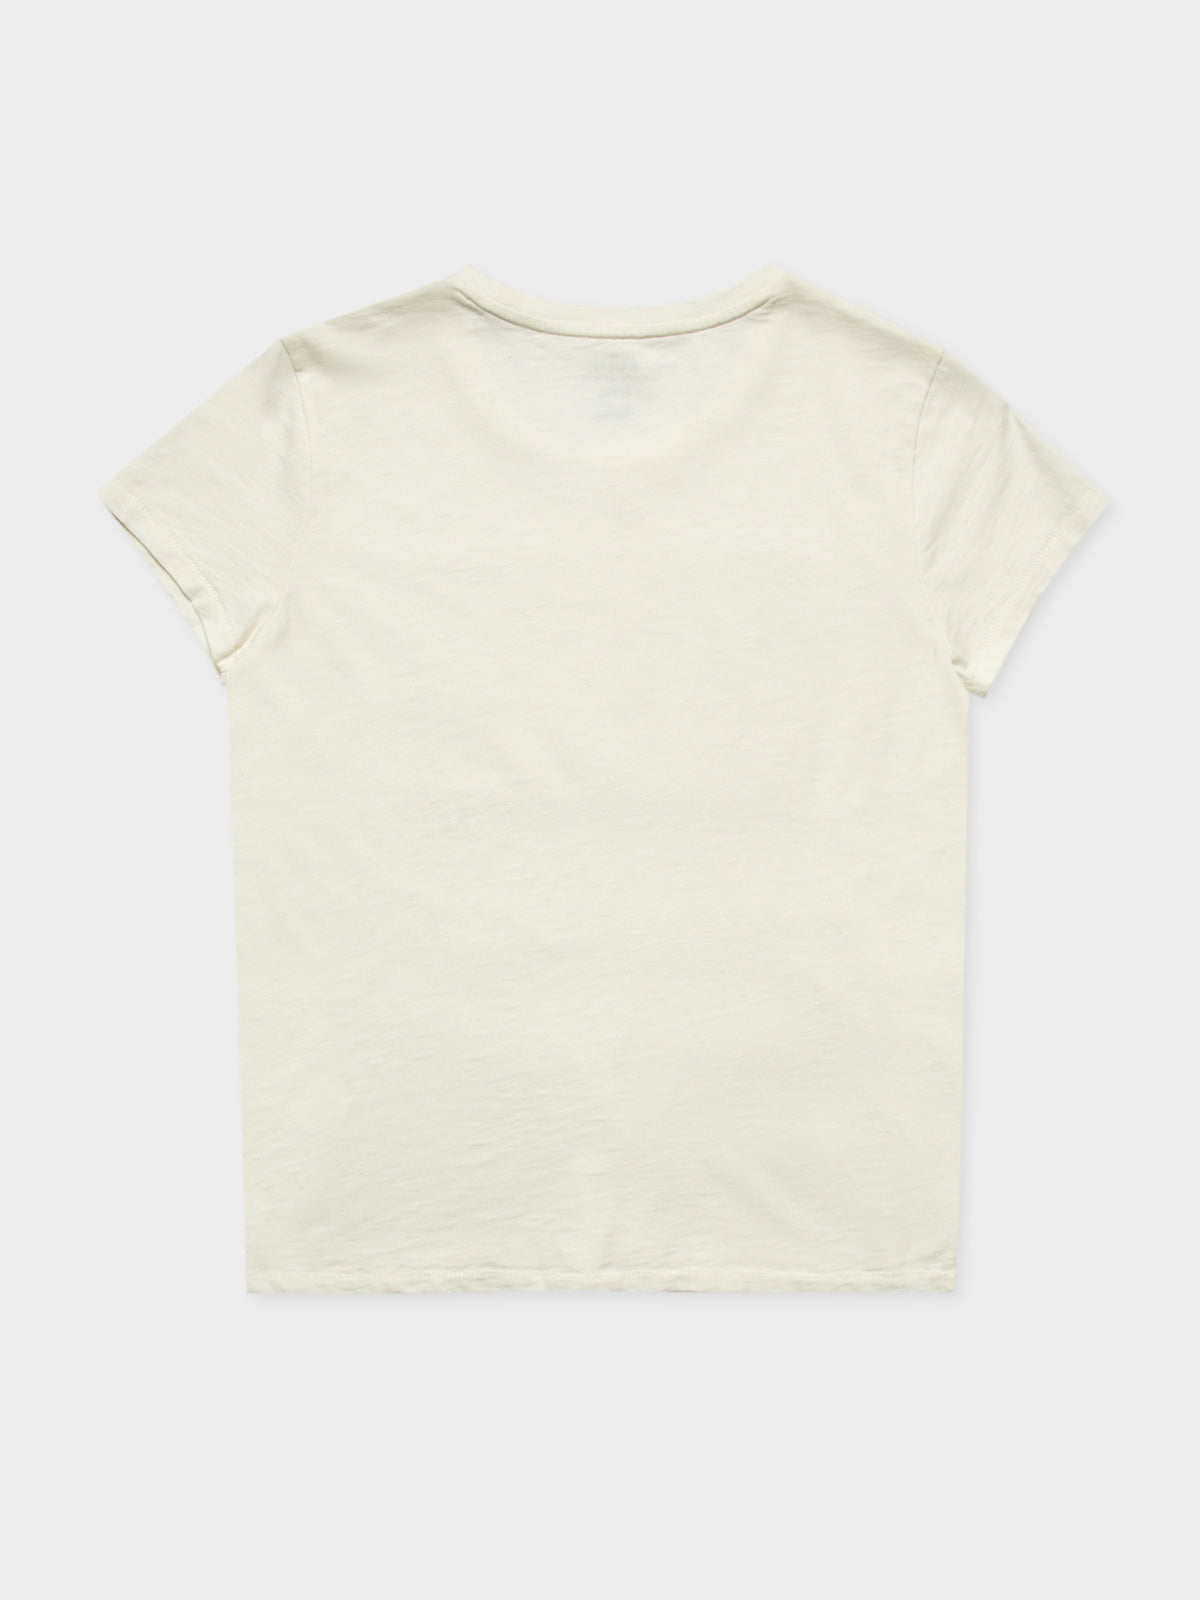 Short Sleeve Flag T-Shirt in Cream